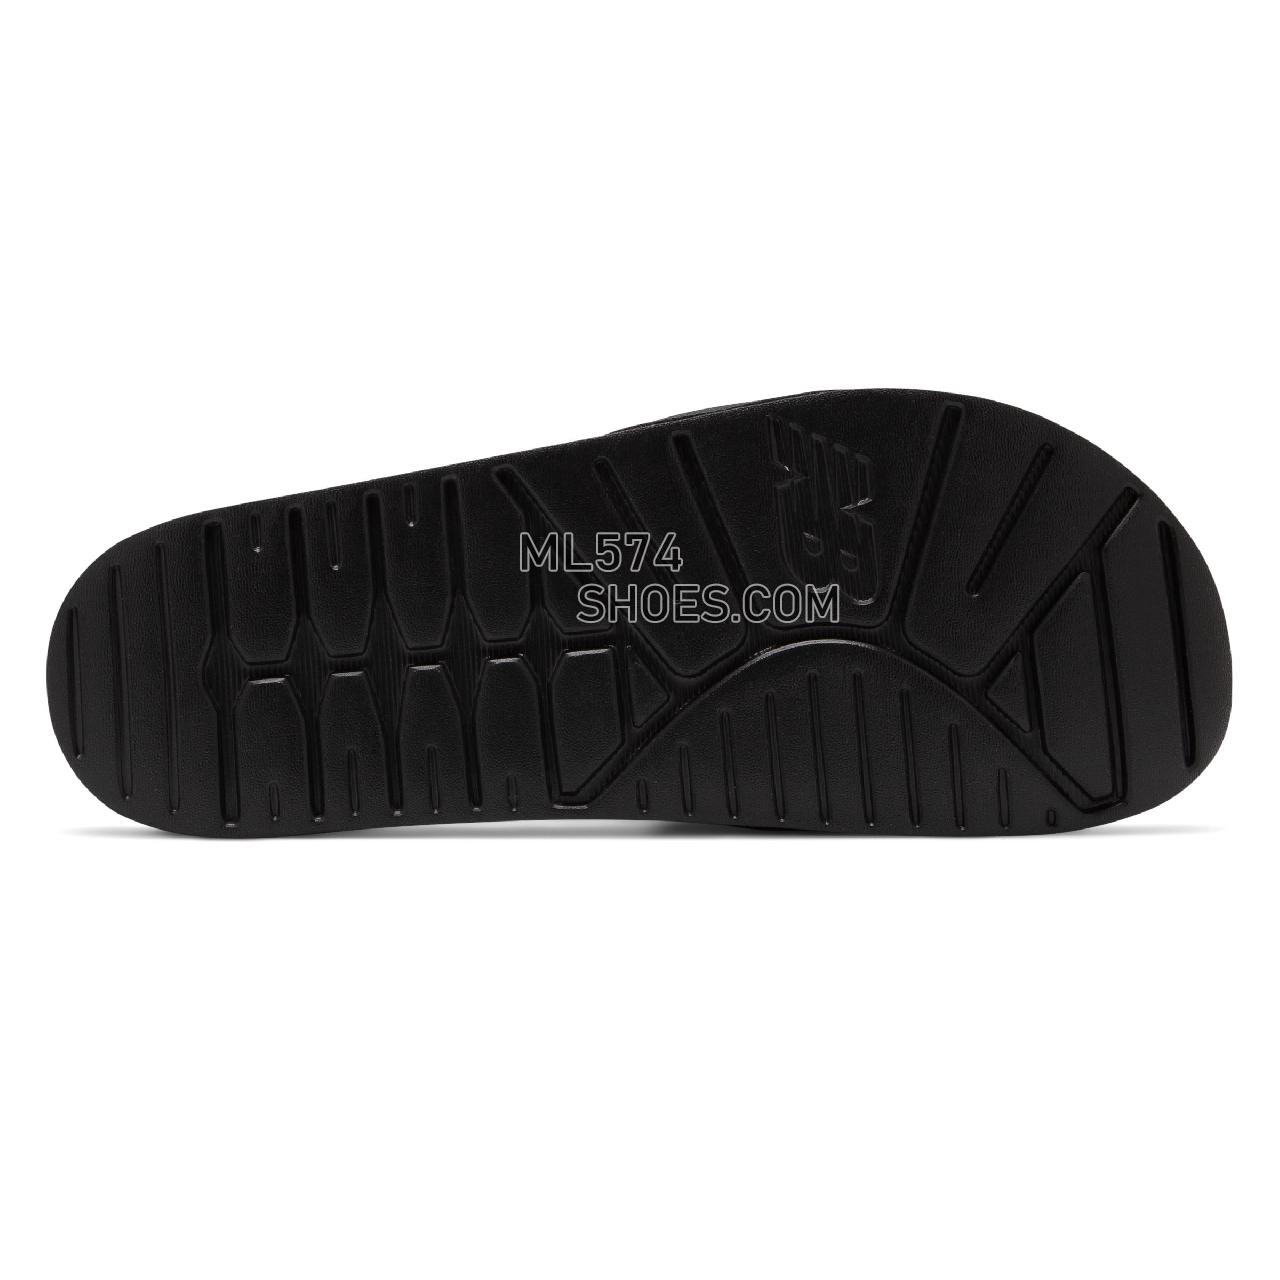 New Balance 200 - Men's Flip Flops - Black with White - SMF200B1